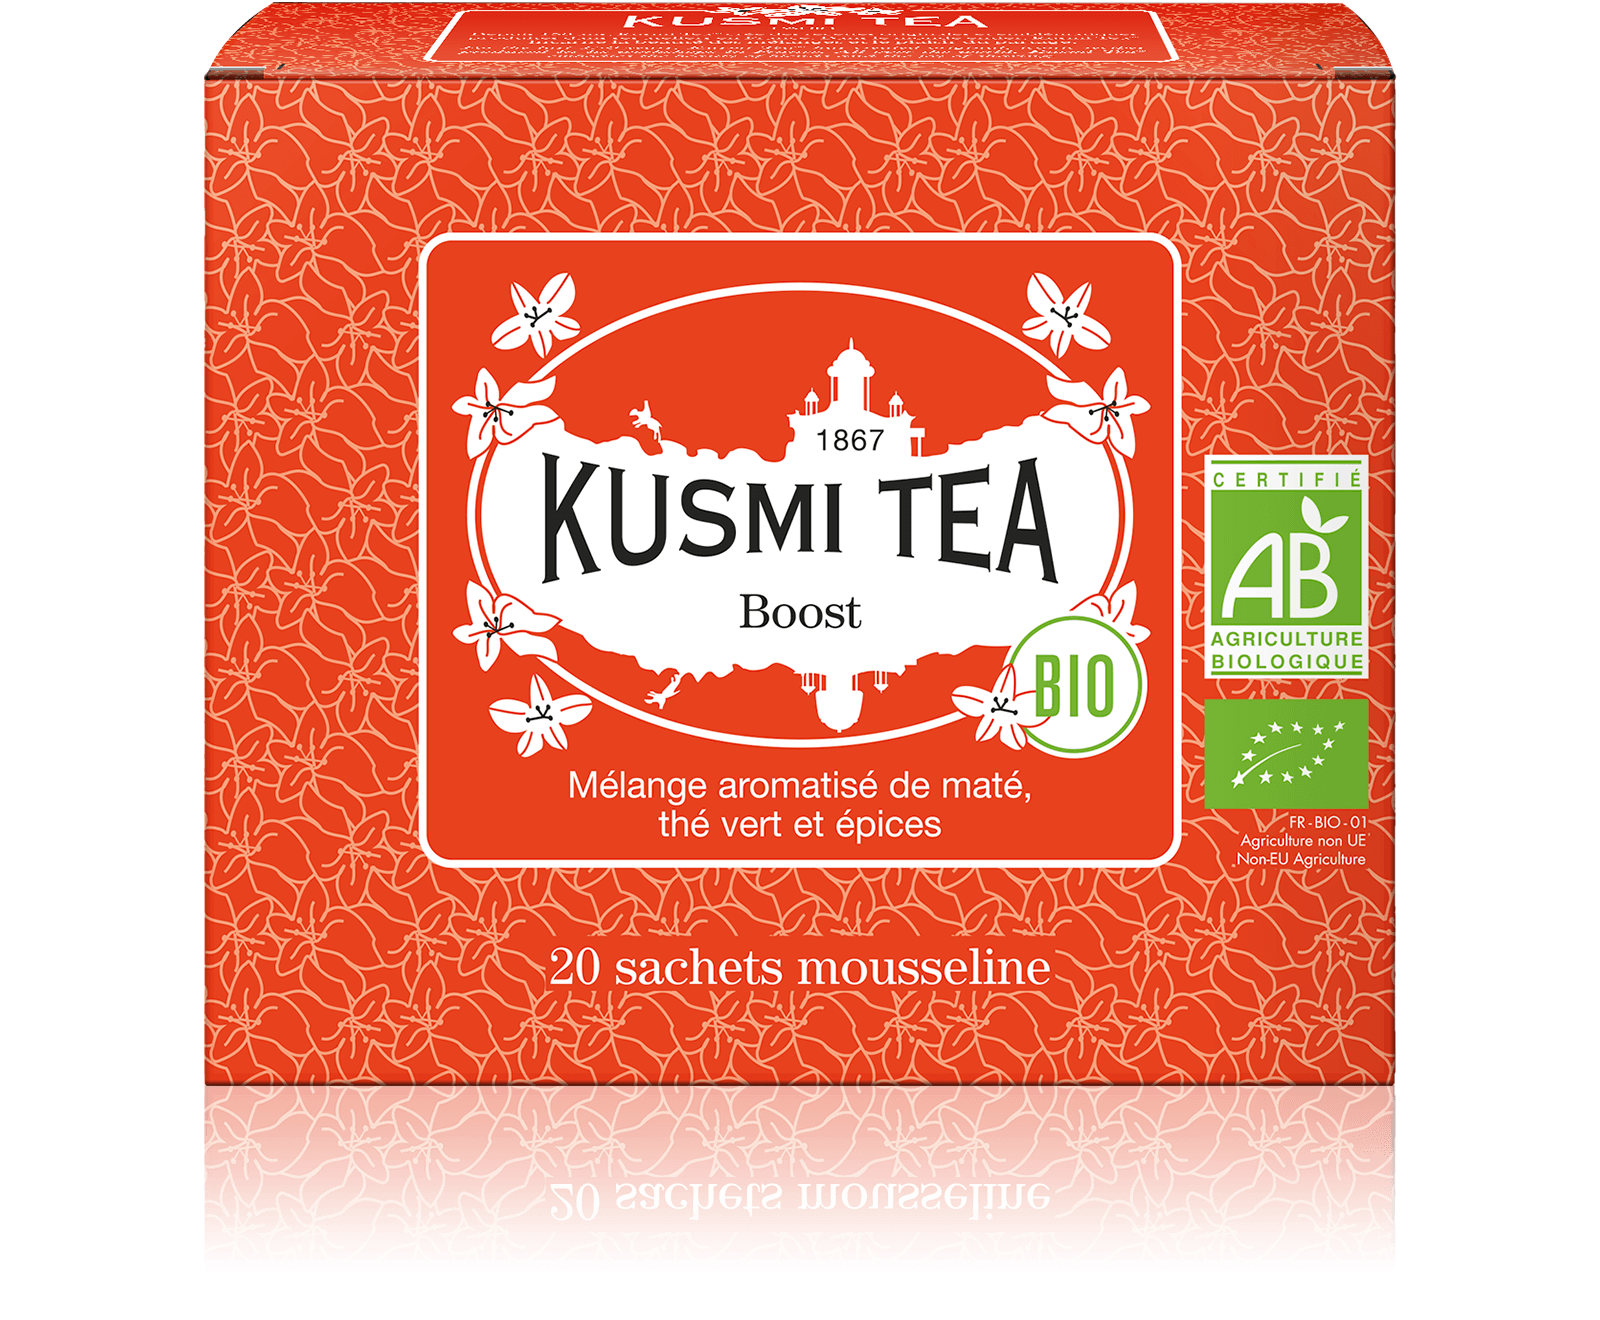 The Detox of Kusmi product range - Kusmi Tea Ile Maurice